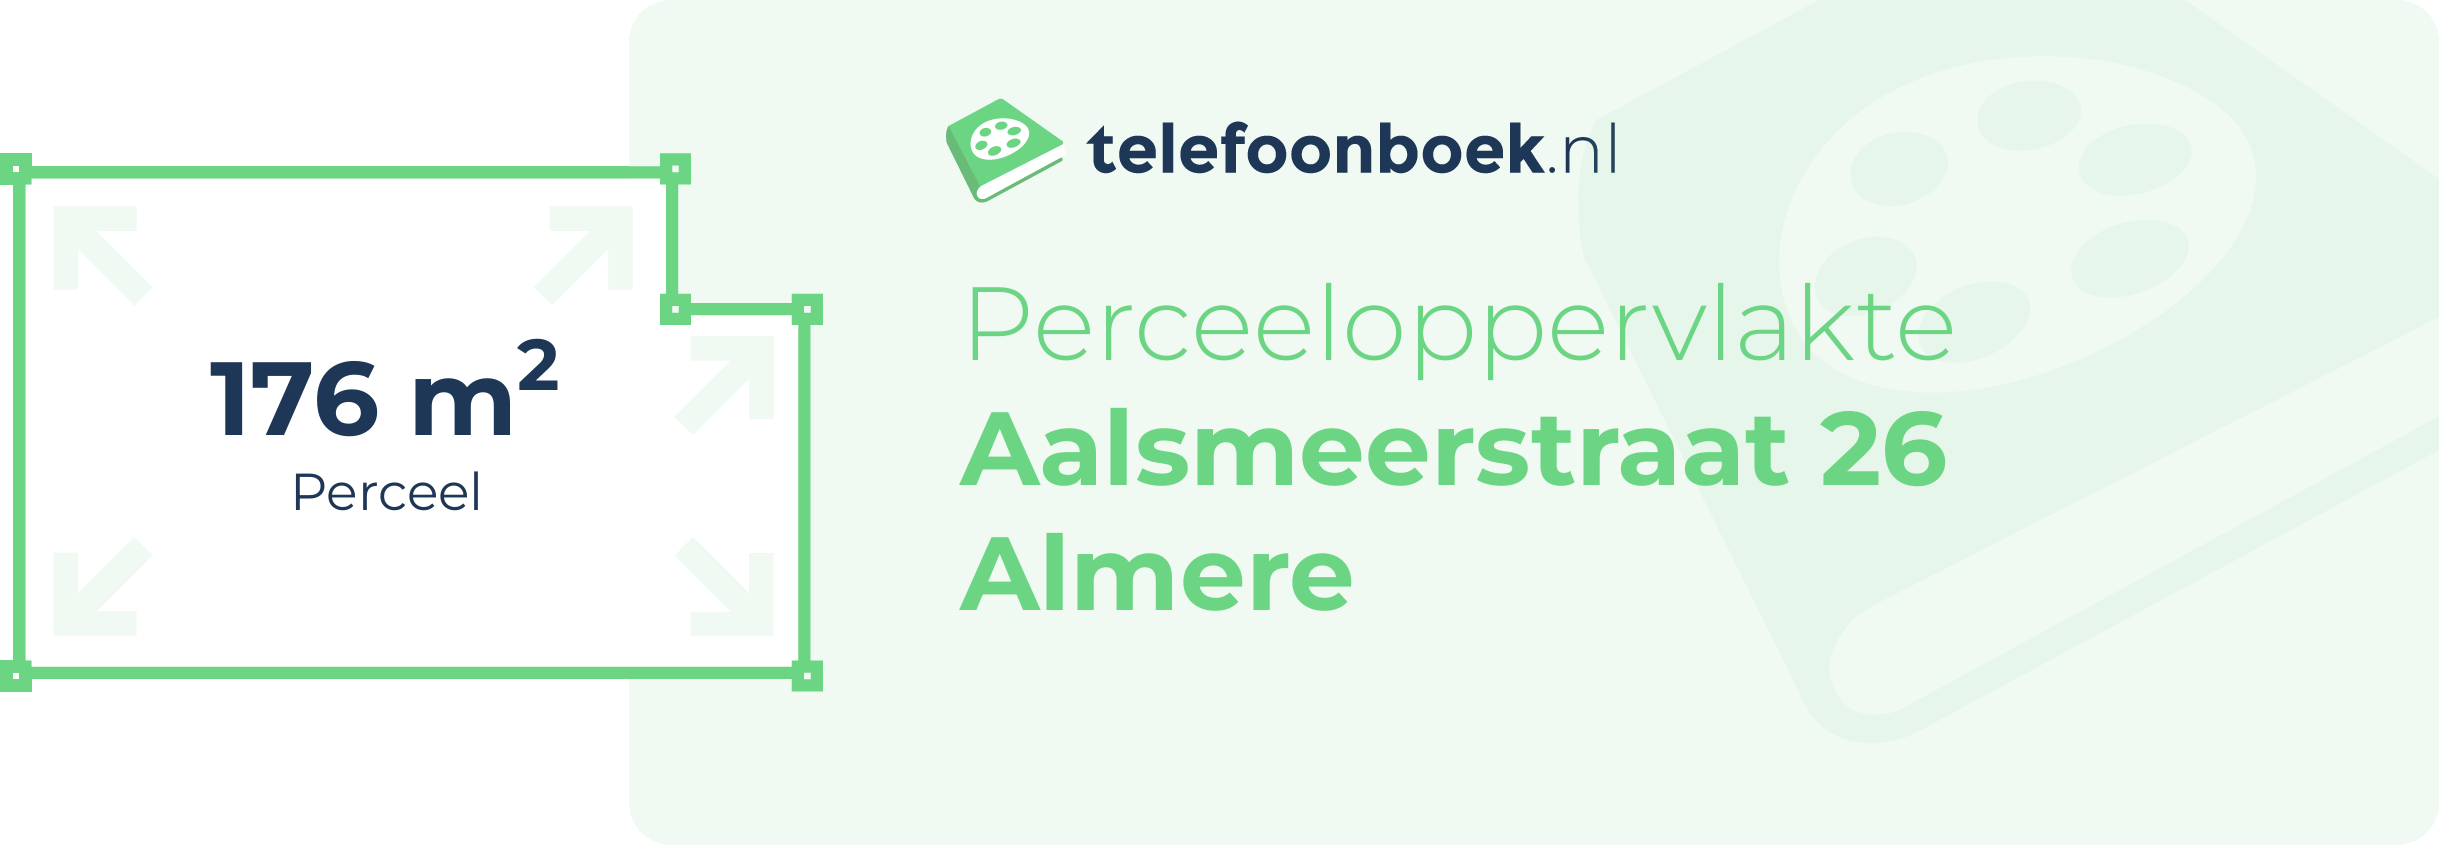 Perceeloppervlakte Aalsmeerstraat 26 Almere